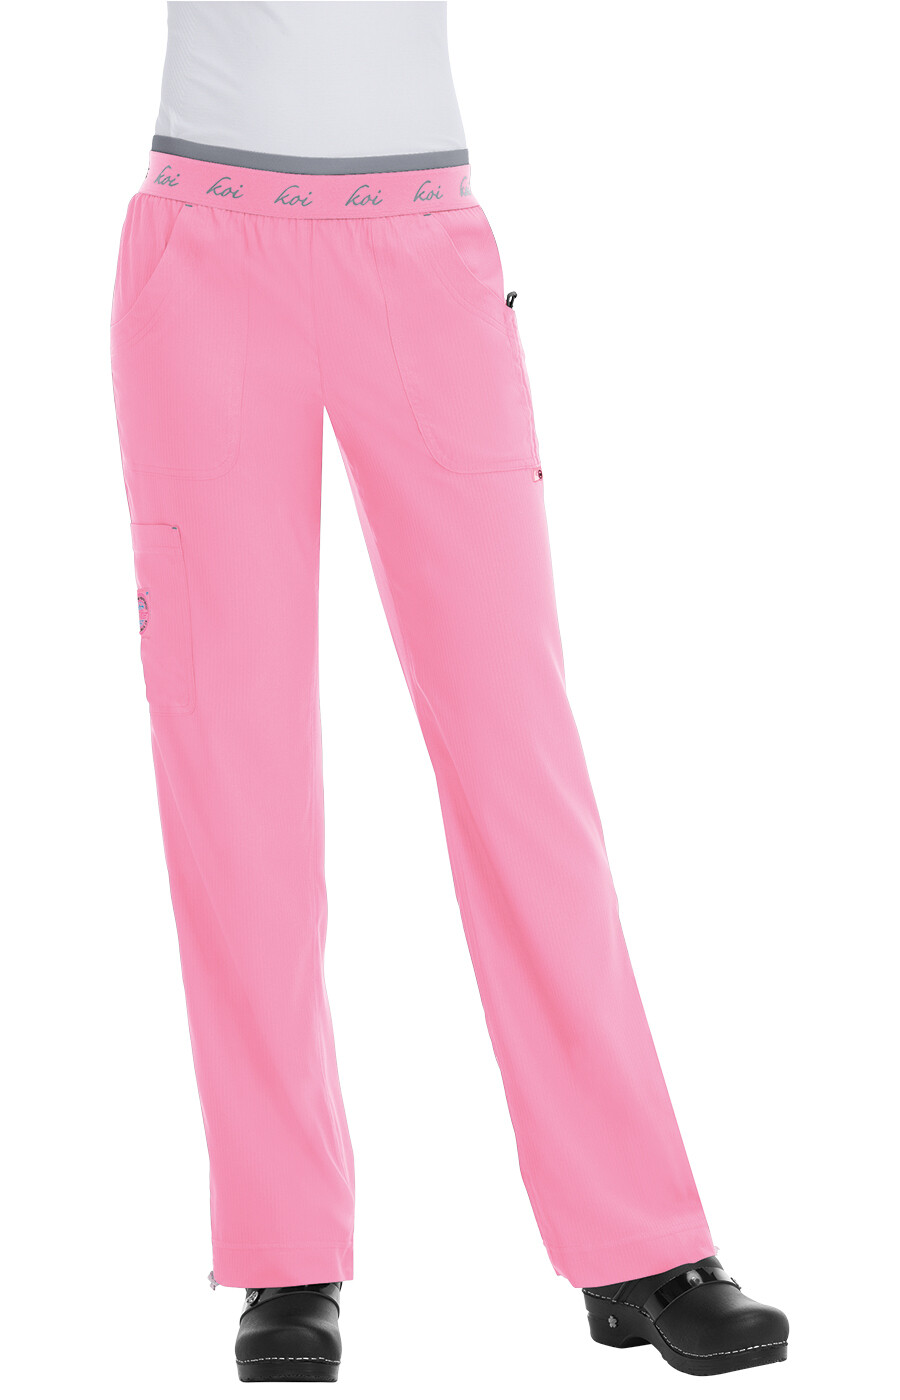 Pantalone KOI LITE SPIRIT Donna Colore 155. Peony Pink